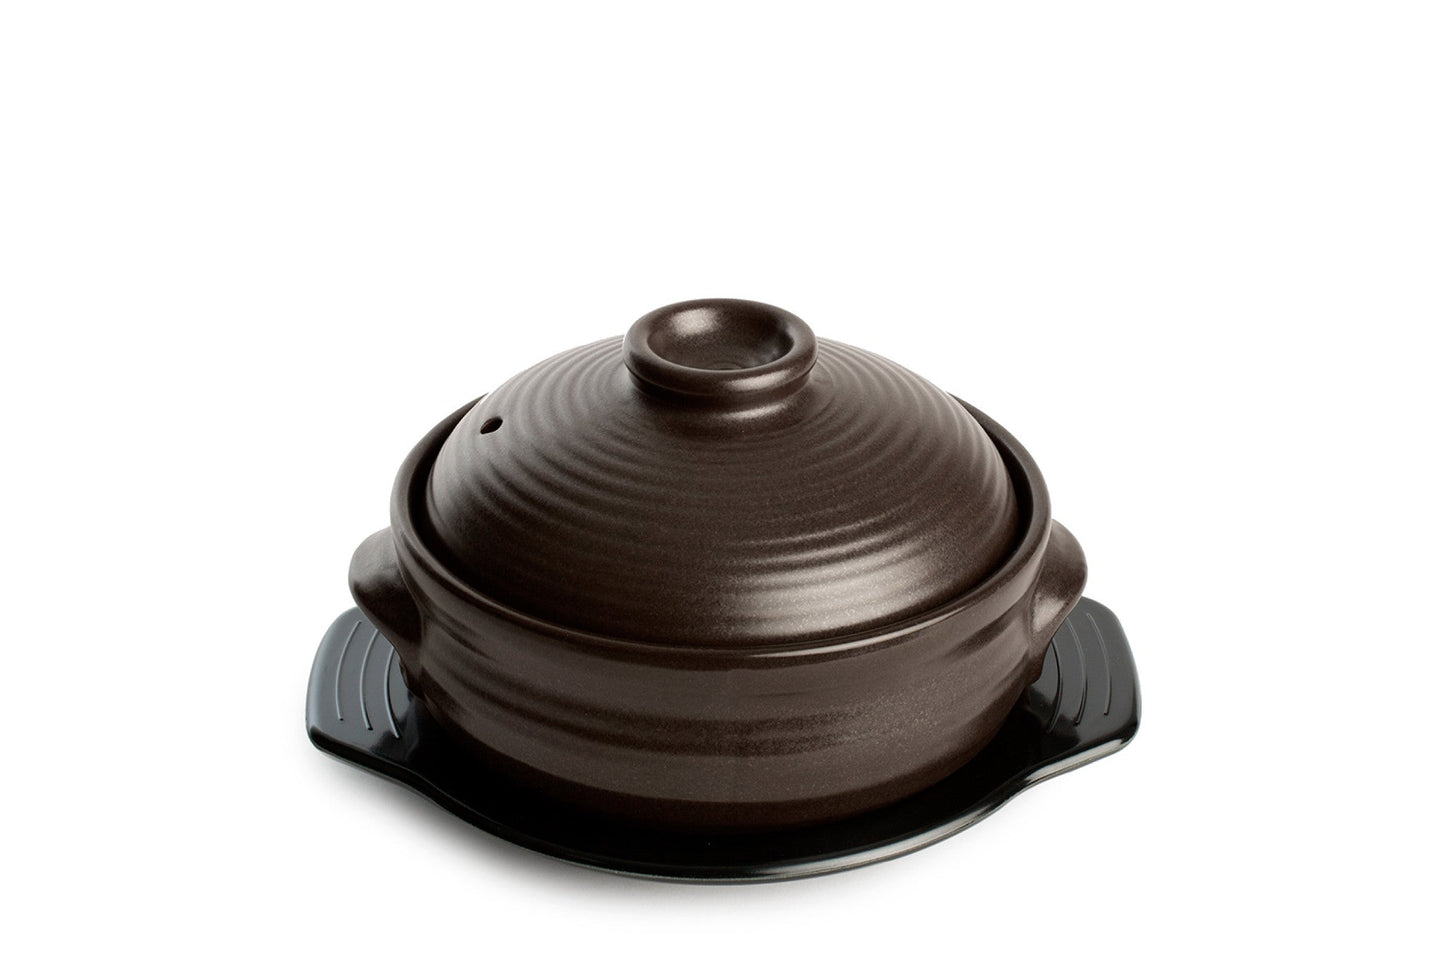 Premium Korean Stone Bowl Large, With Lid